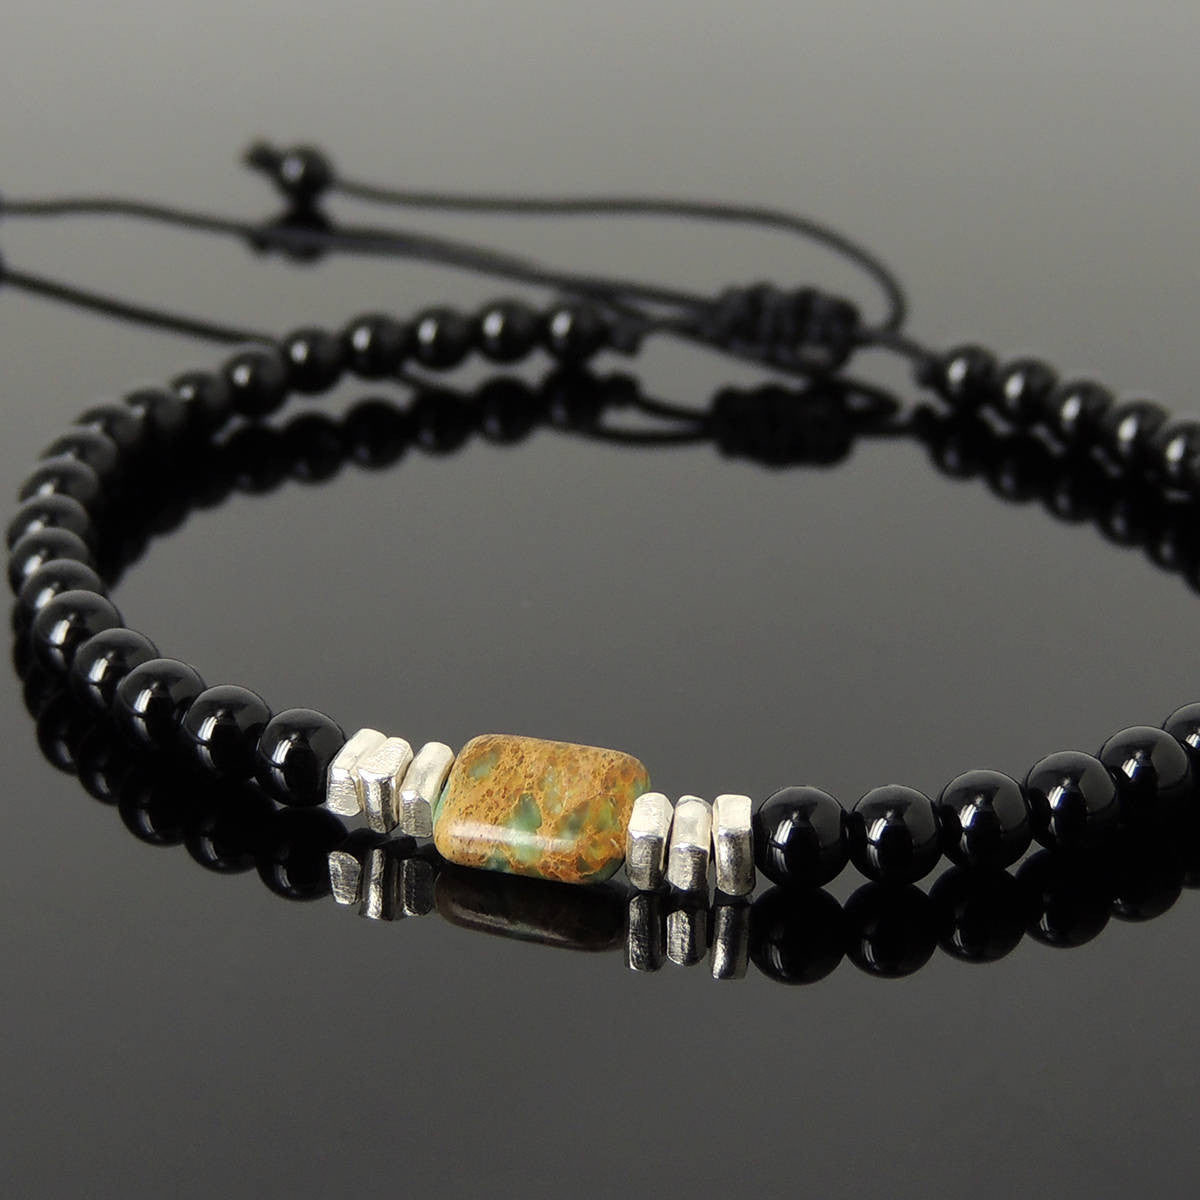 Snake Skin Stone & Bright Black Onyx Adjustable Braided Gemstone Bracelet with S925 Sterling Silver Nugget Beads - Handmade by Gem & Silver BR1123